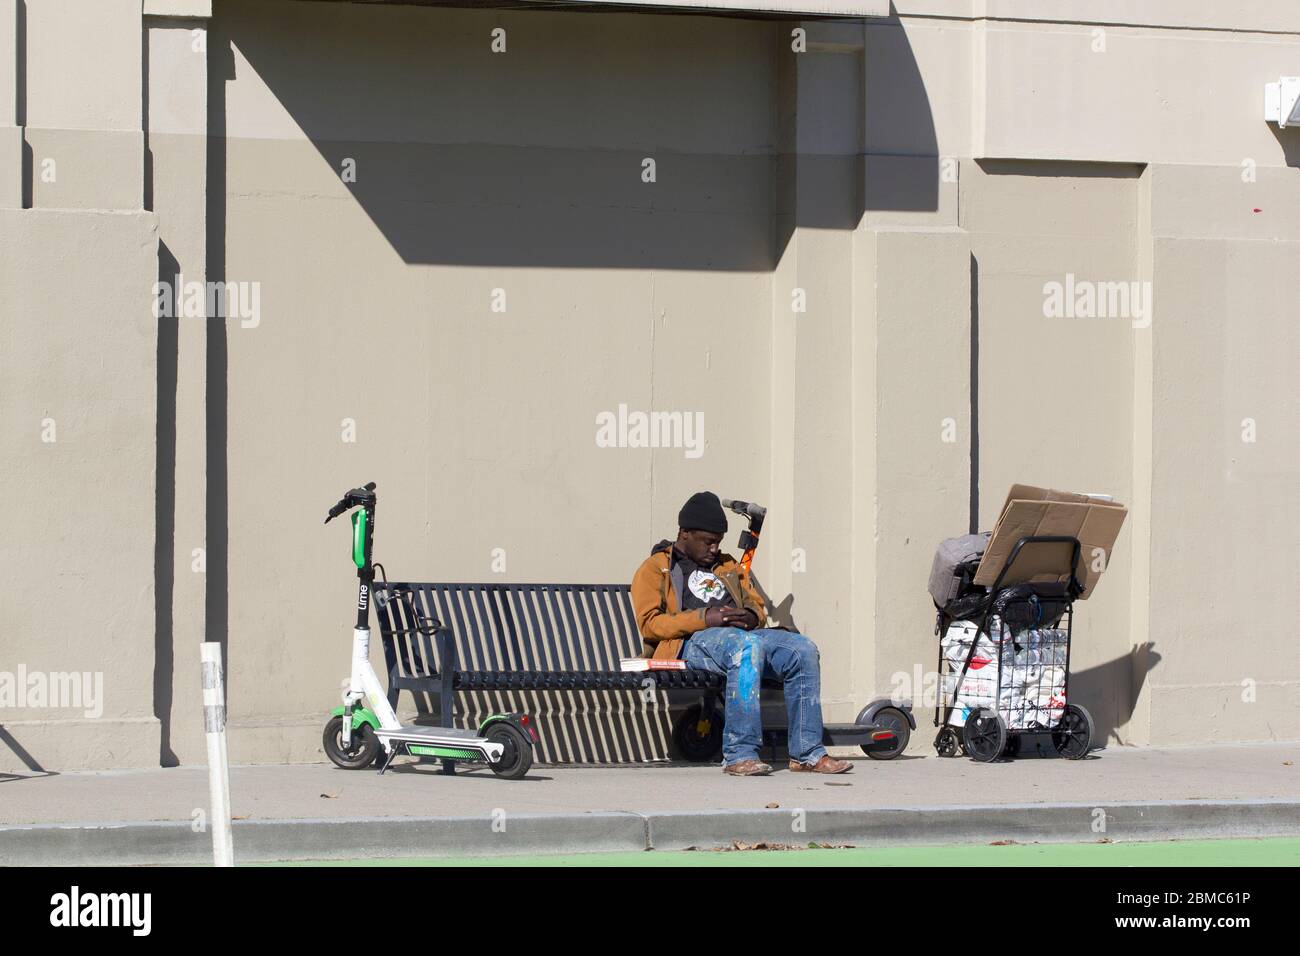 A homeless man naps on the street in the SoMa neighborhood of San Francisco, California. Frye Gaillard's book A HARD RAIN is seen on the bench. Stock Photo